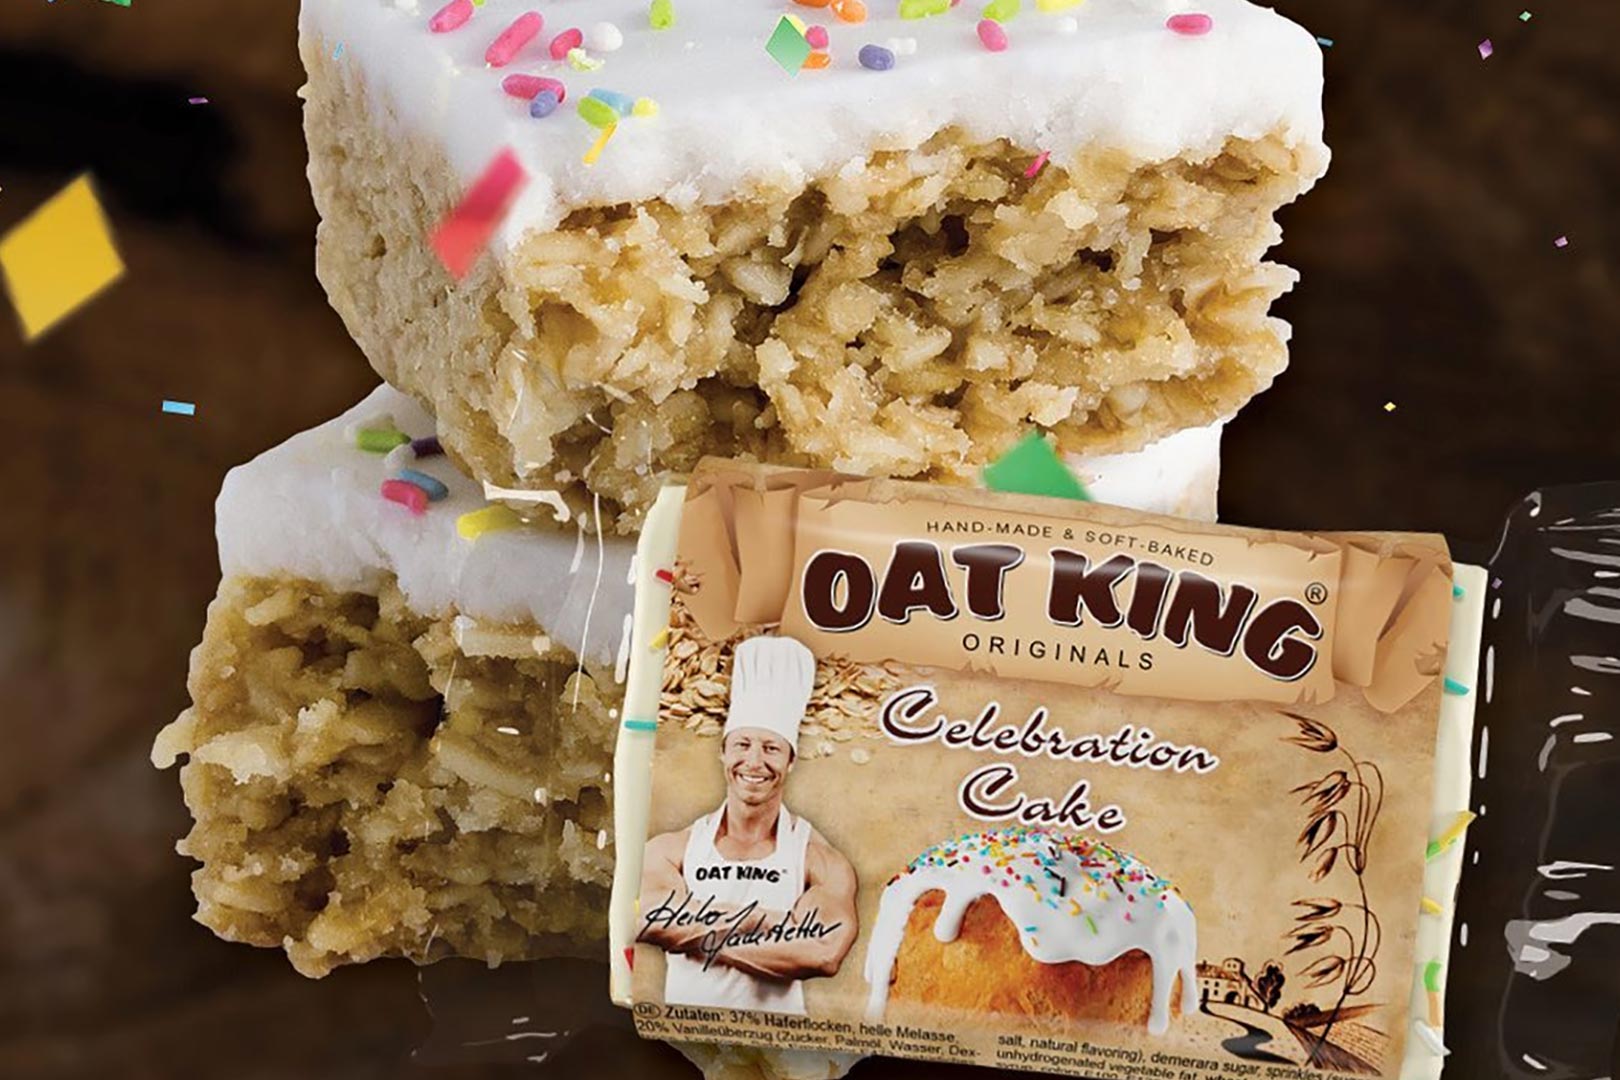 Oat King Celebration Cake